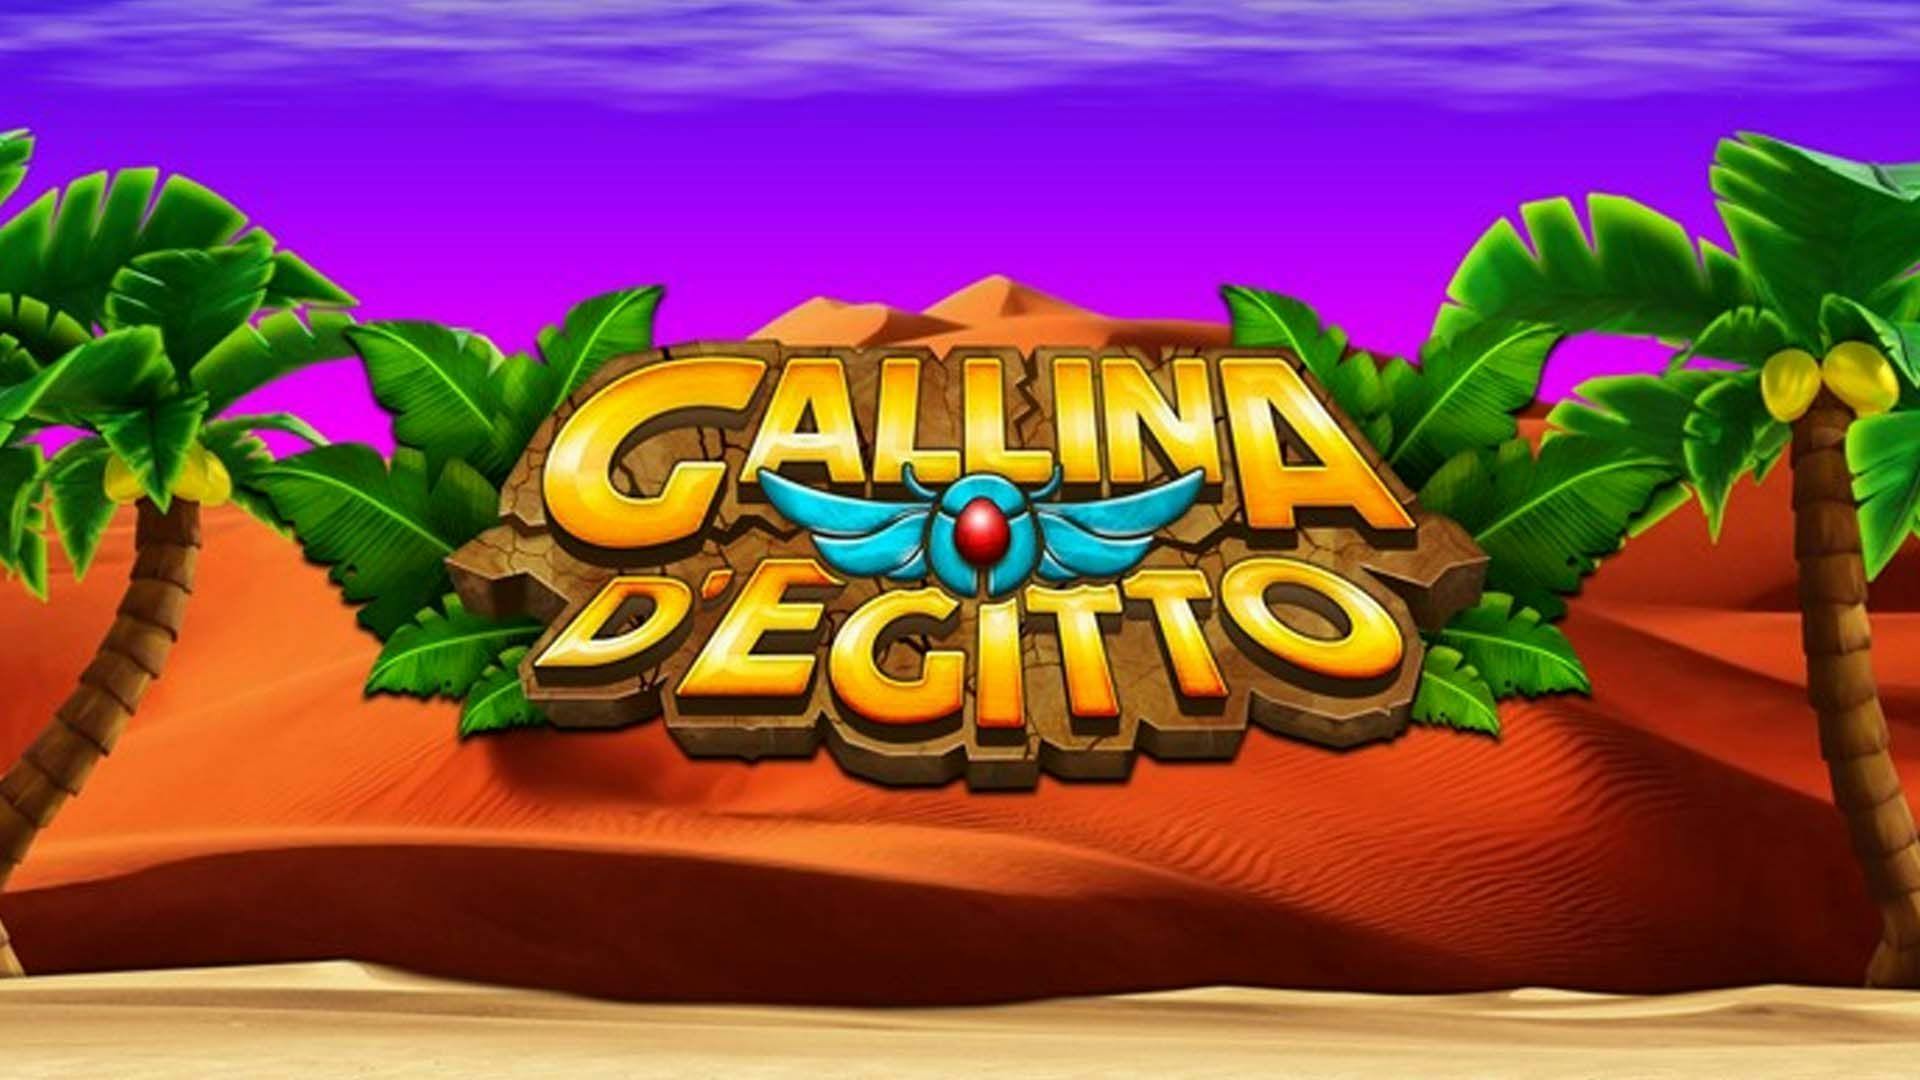 Gallina D'Egitto Slot Machine Online Free Game Play